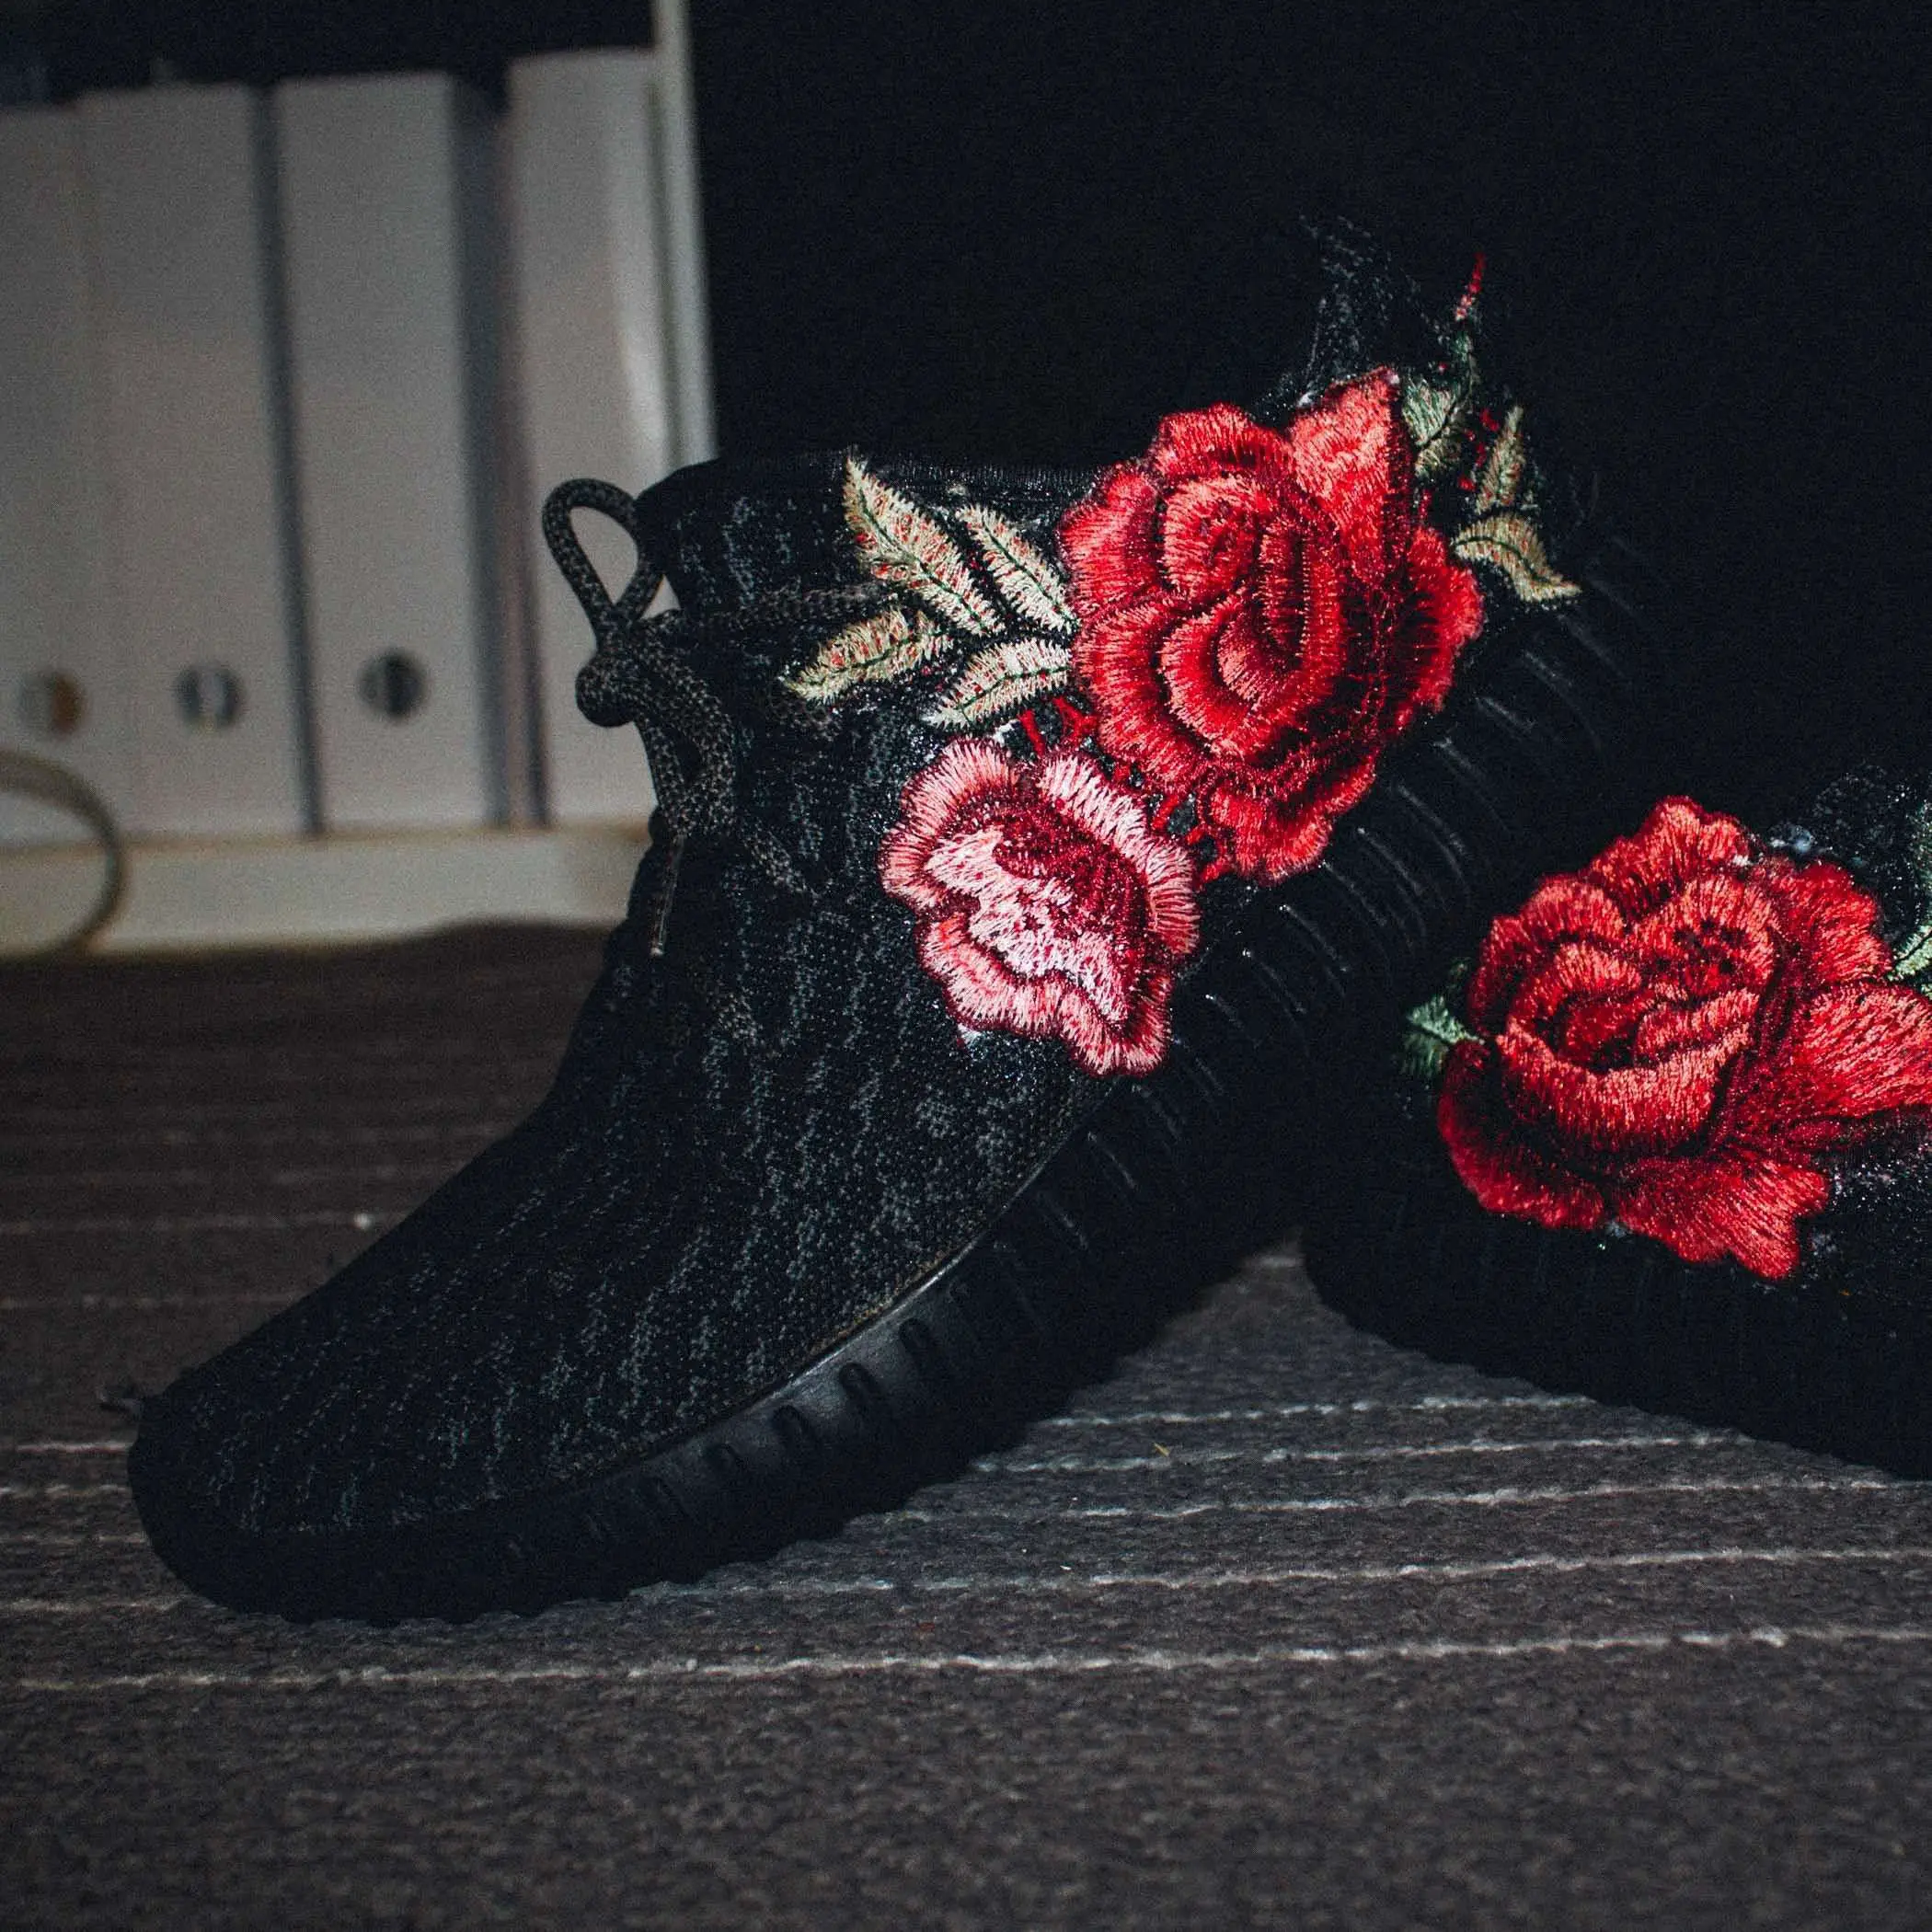 Yeezy Style Rose Sneakers